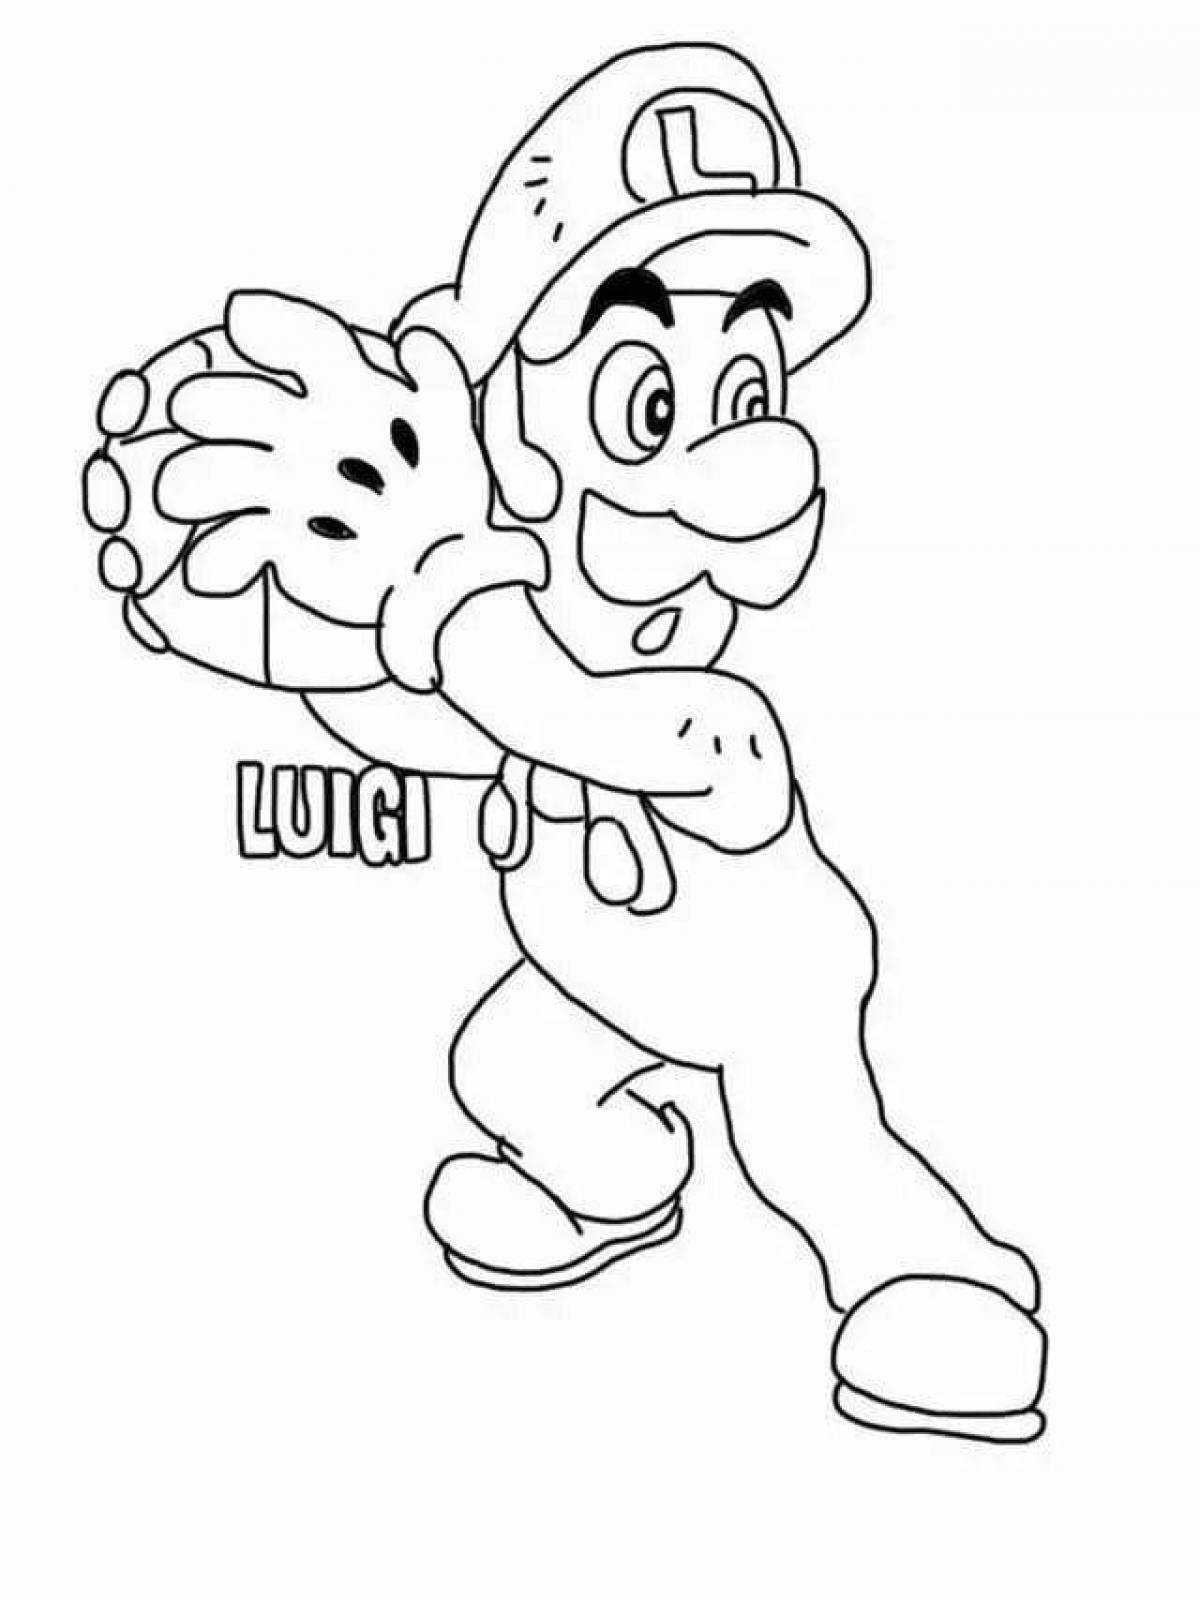 Luigi's playful coloring